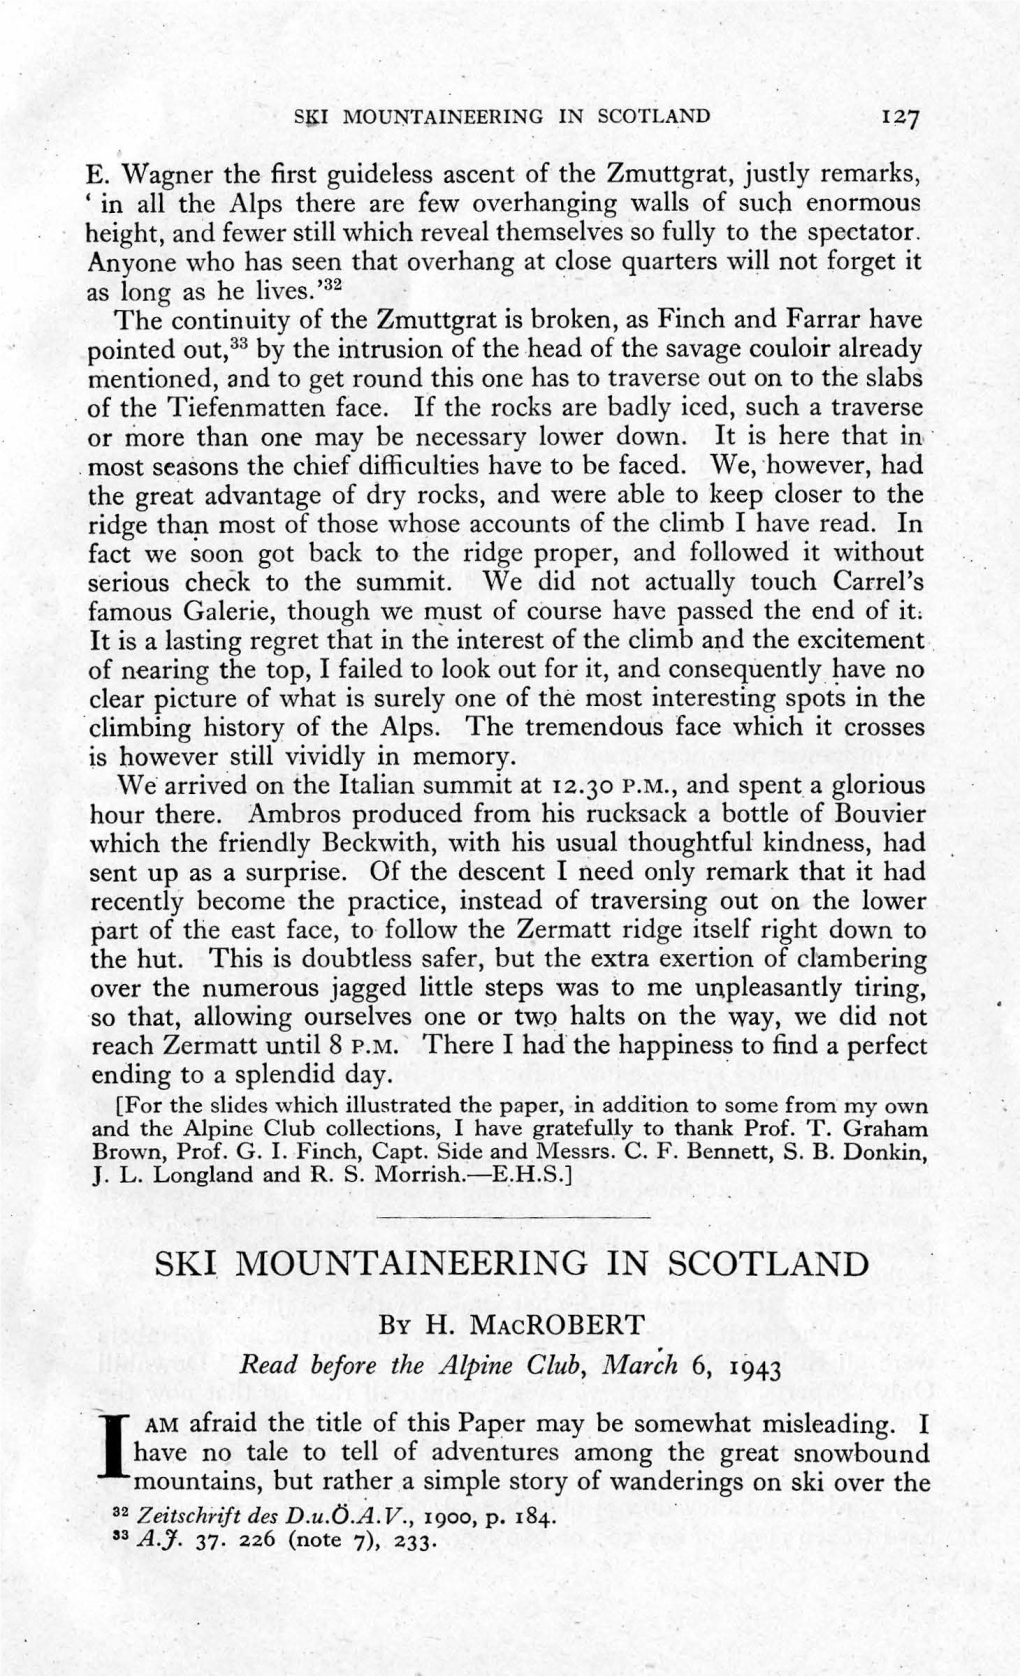 SKI MOUNTAINEERING in SCOTLAND. H. Macrobert